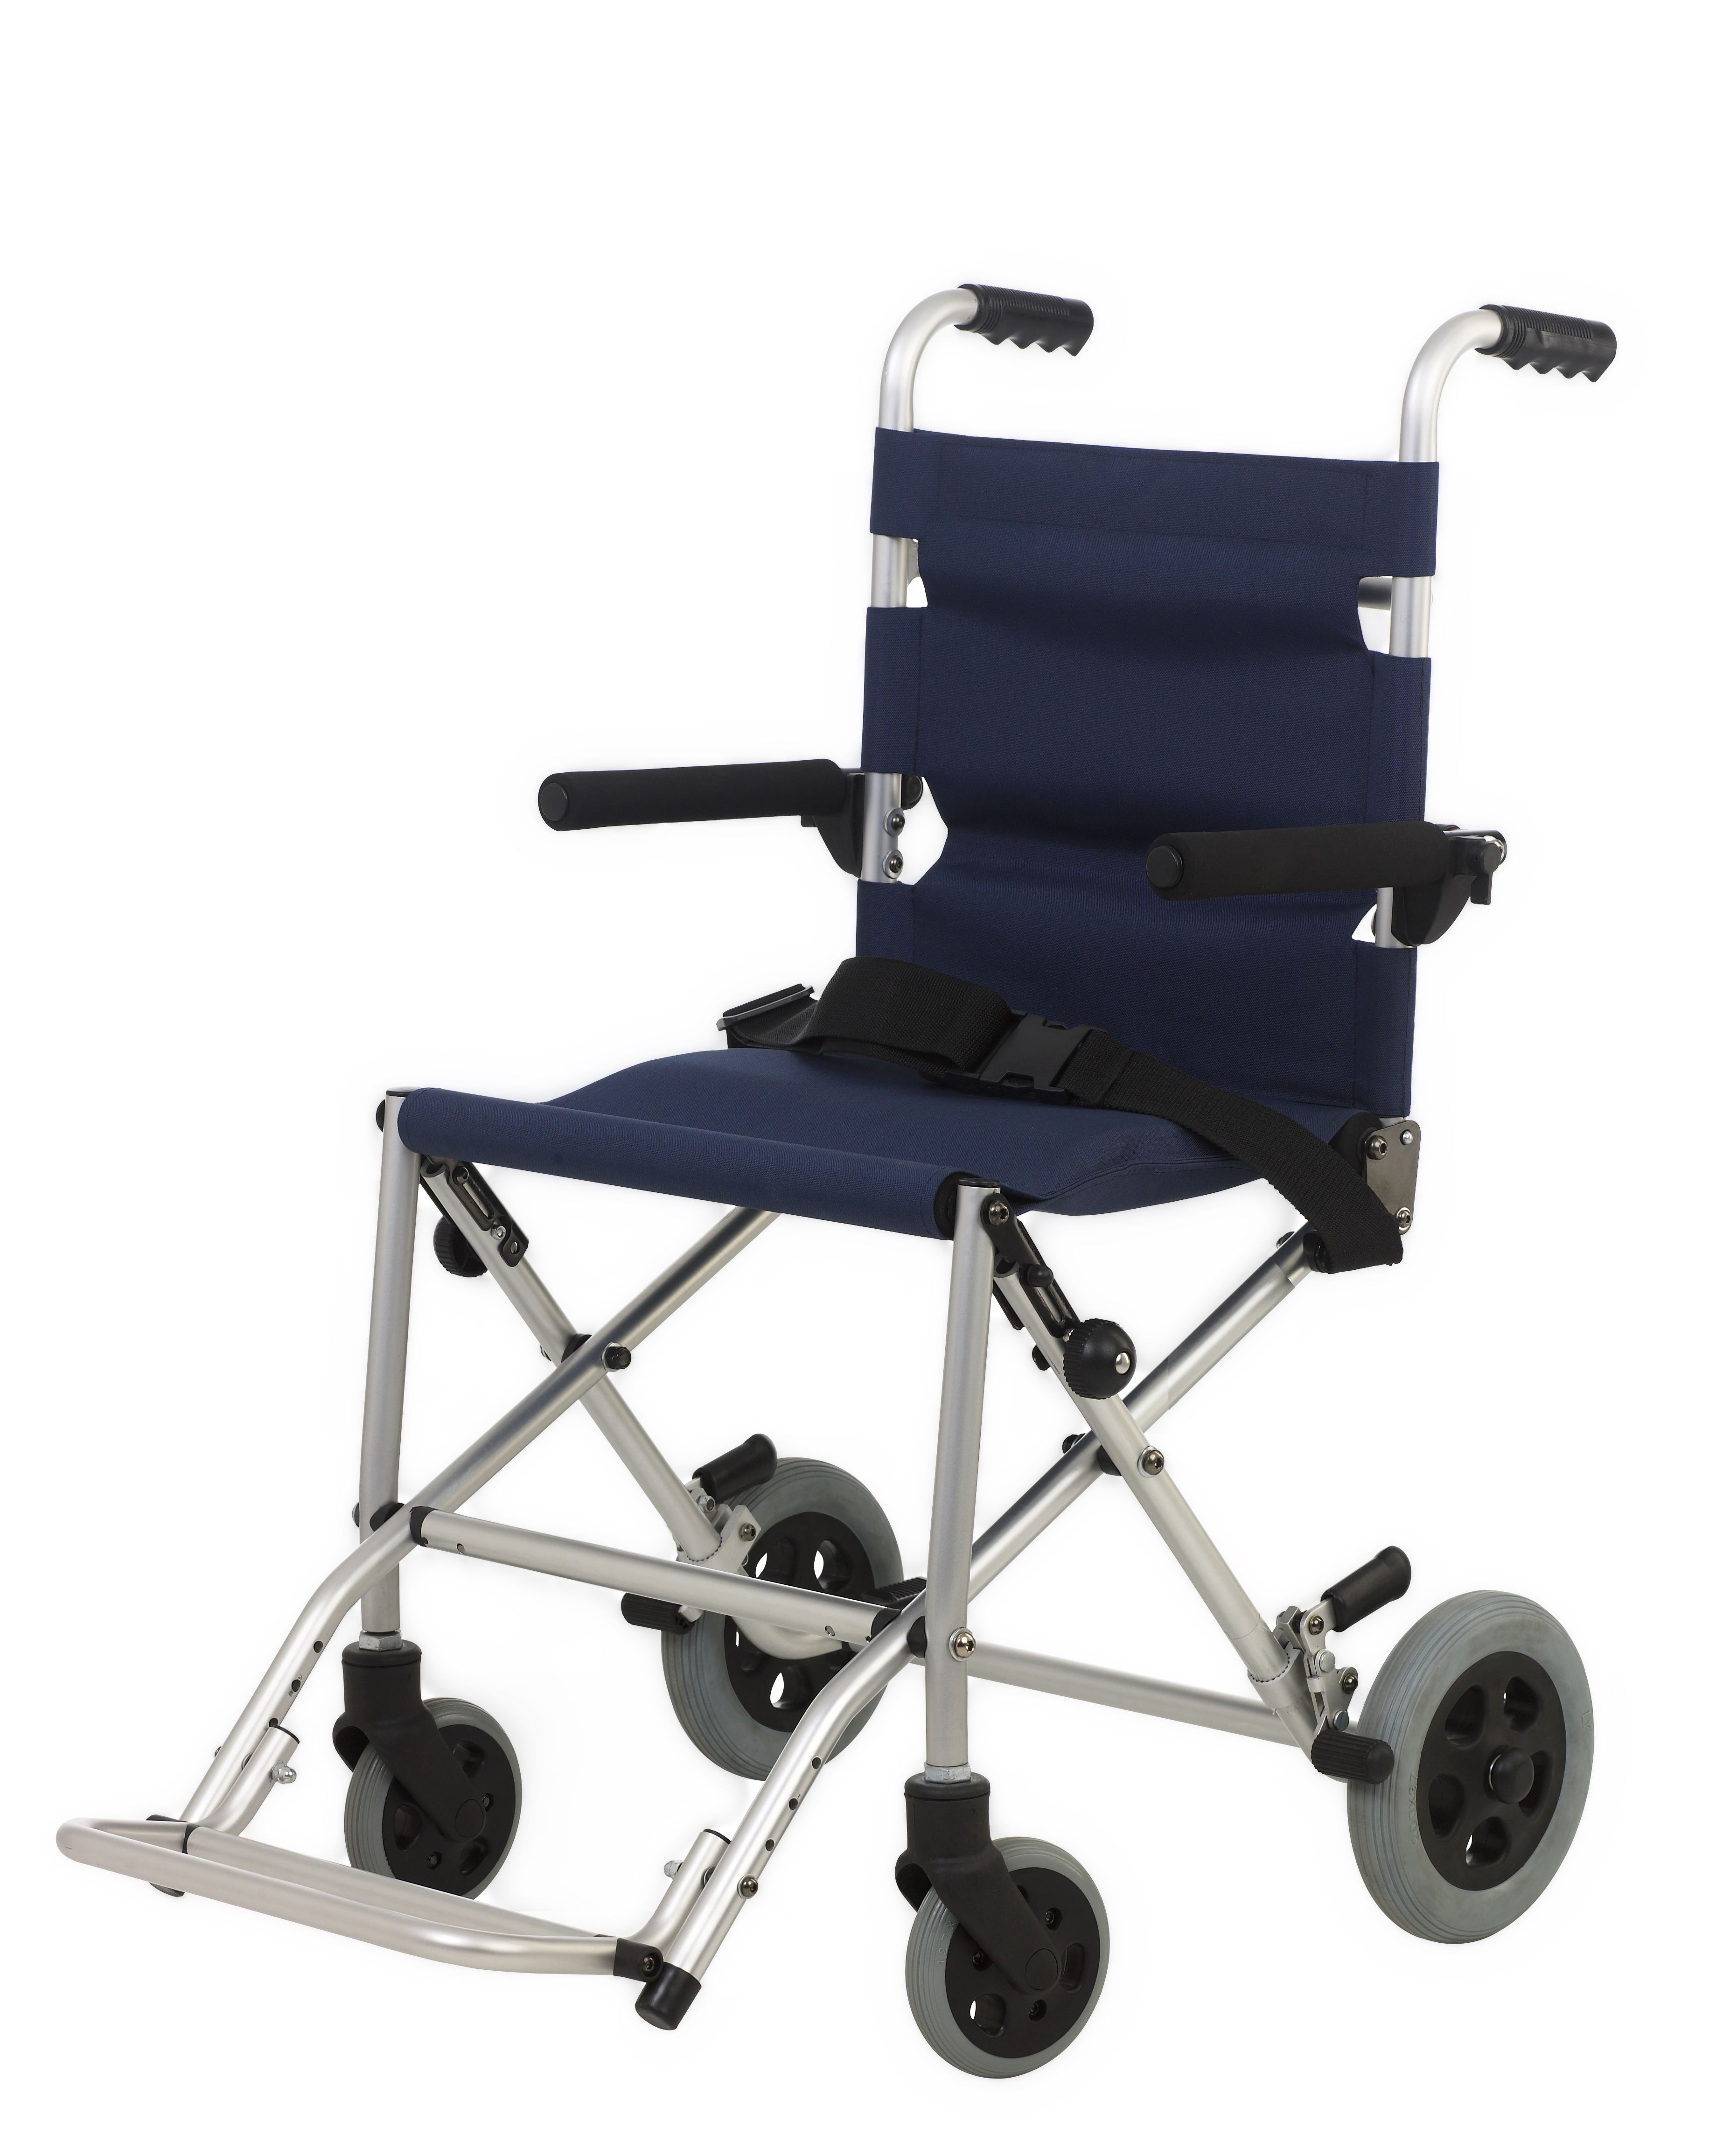 Travell Chair Big Reiserollstuhl, faltbar 65 cm breit bis 110 kg belastbar inkl. Transporttasche